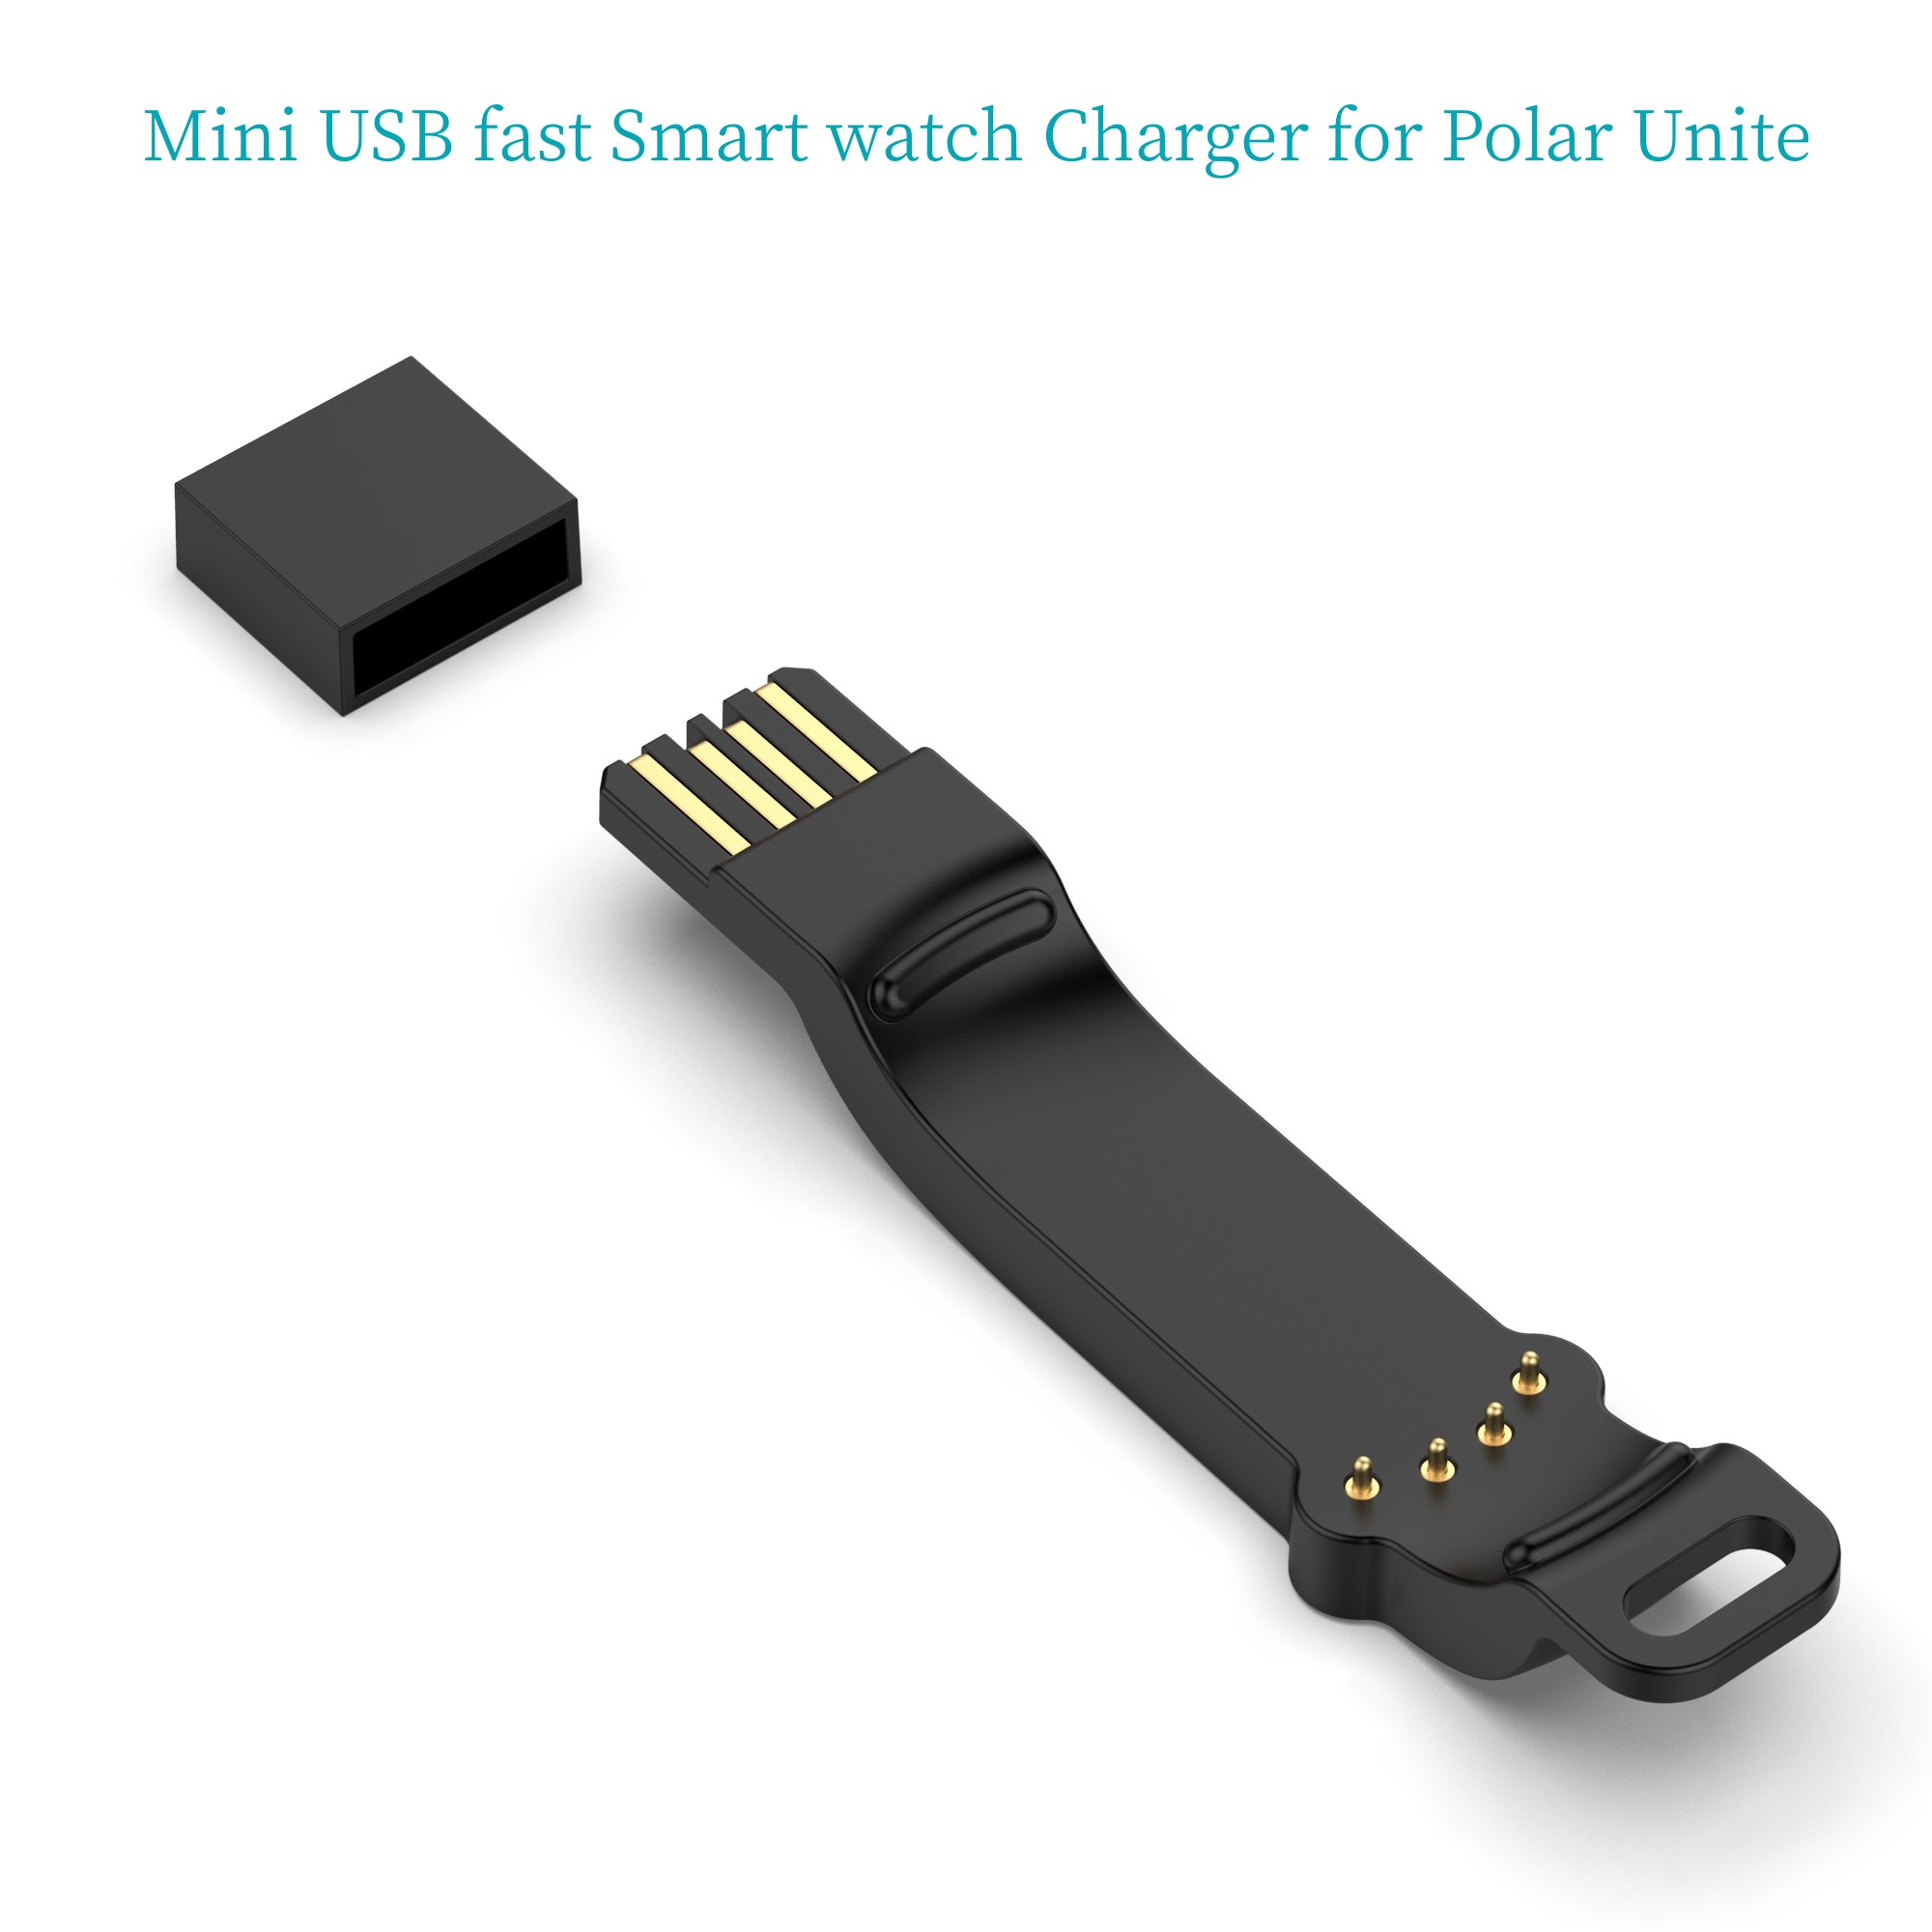 Cargador USB rápido para reloj inteligente, adaptador de corriente de carga para Polar Unite